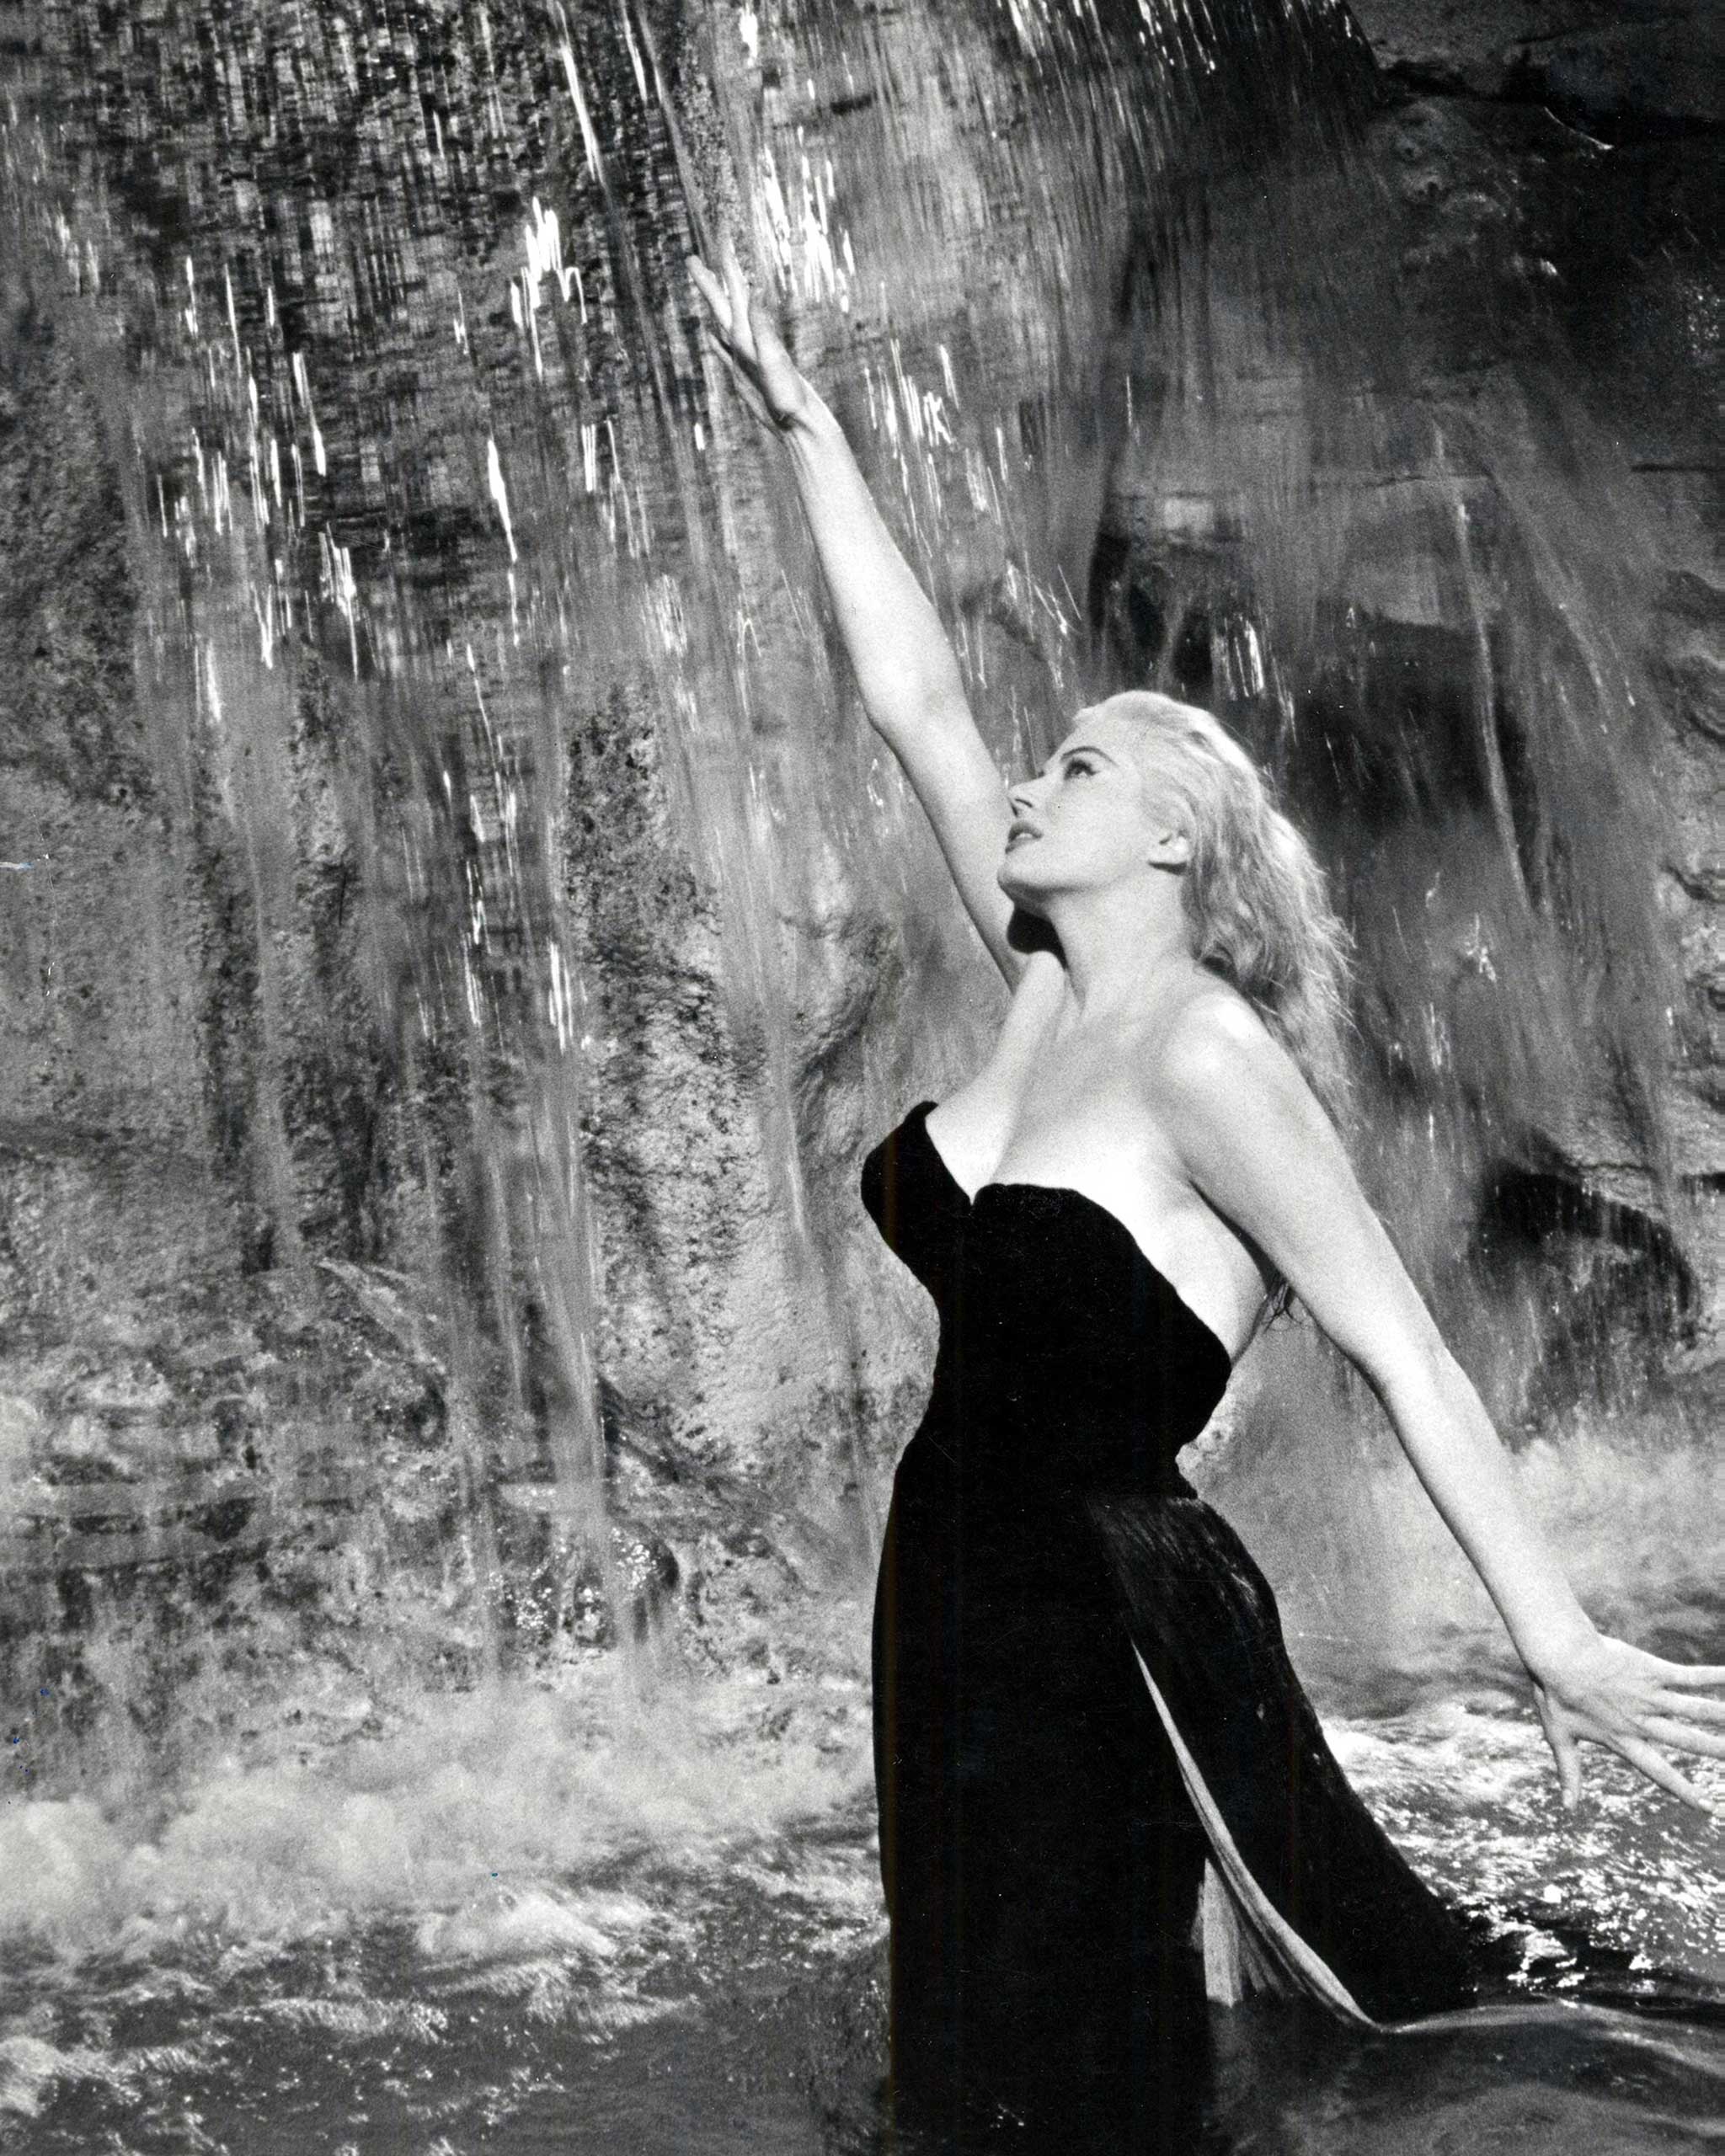 Ekberg as the Marilyn Monroe-like Sylvia, playing in Rome's Trevi fountain in La Dolce Vita in1960.